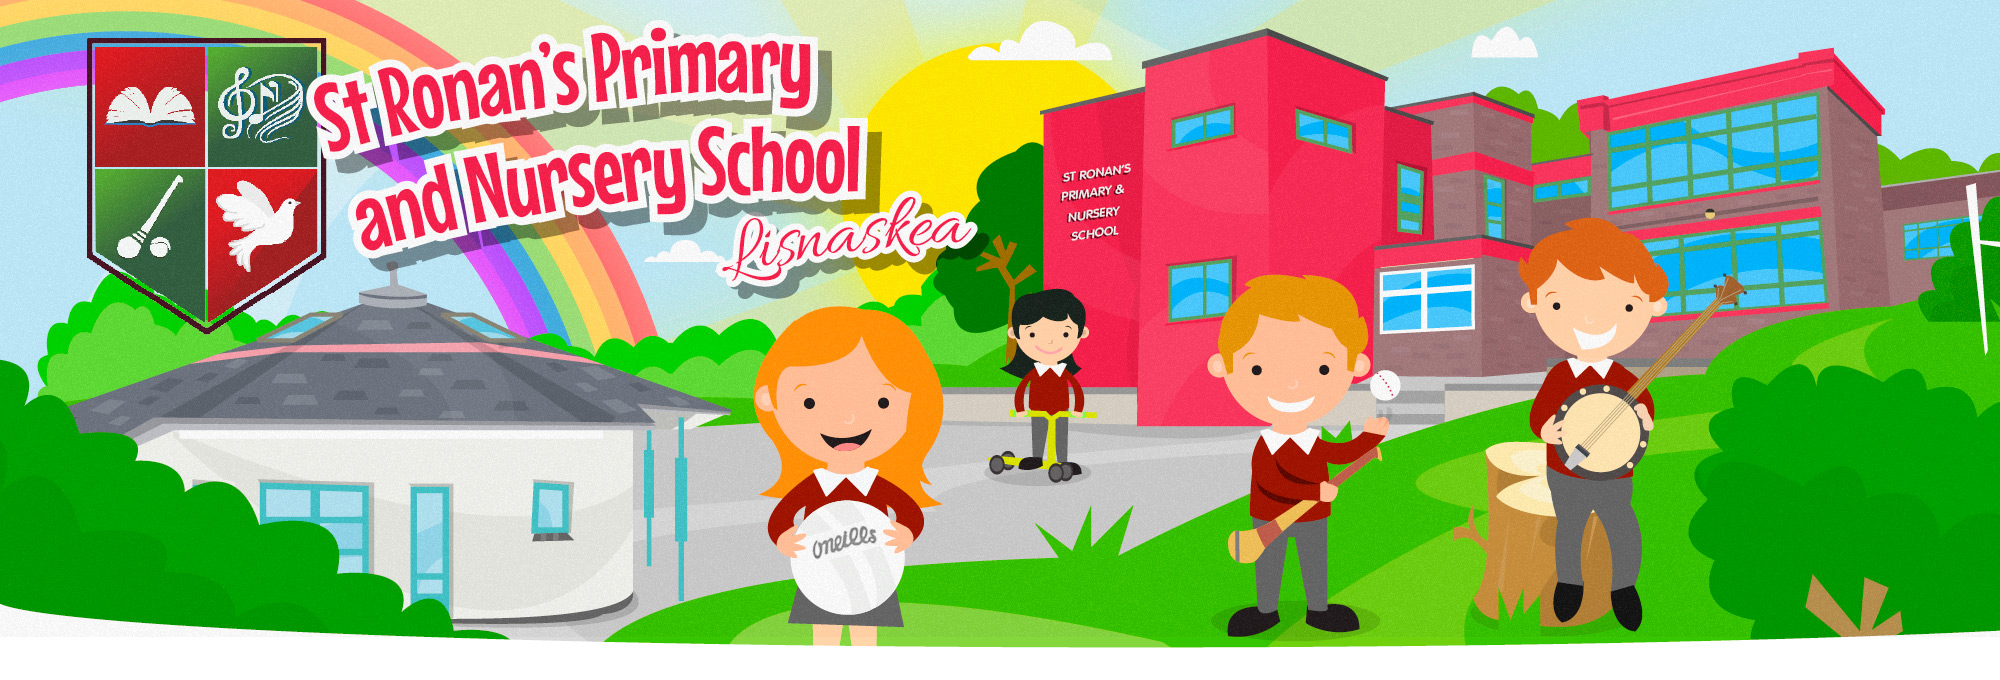 St Ronan's Primary and Nursery School, Lisnaskea, Enniskillen